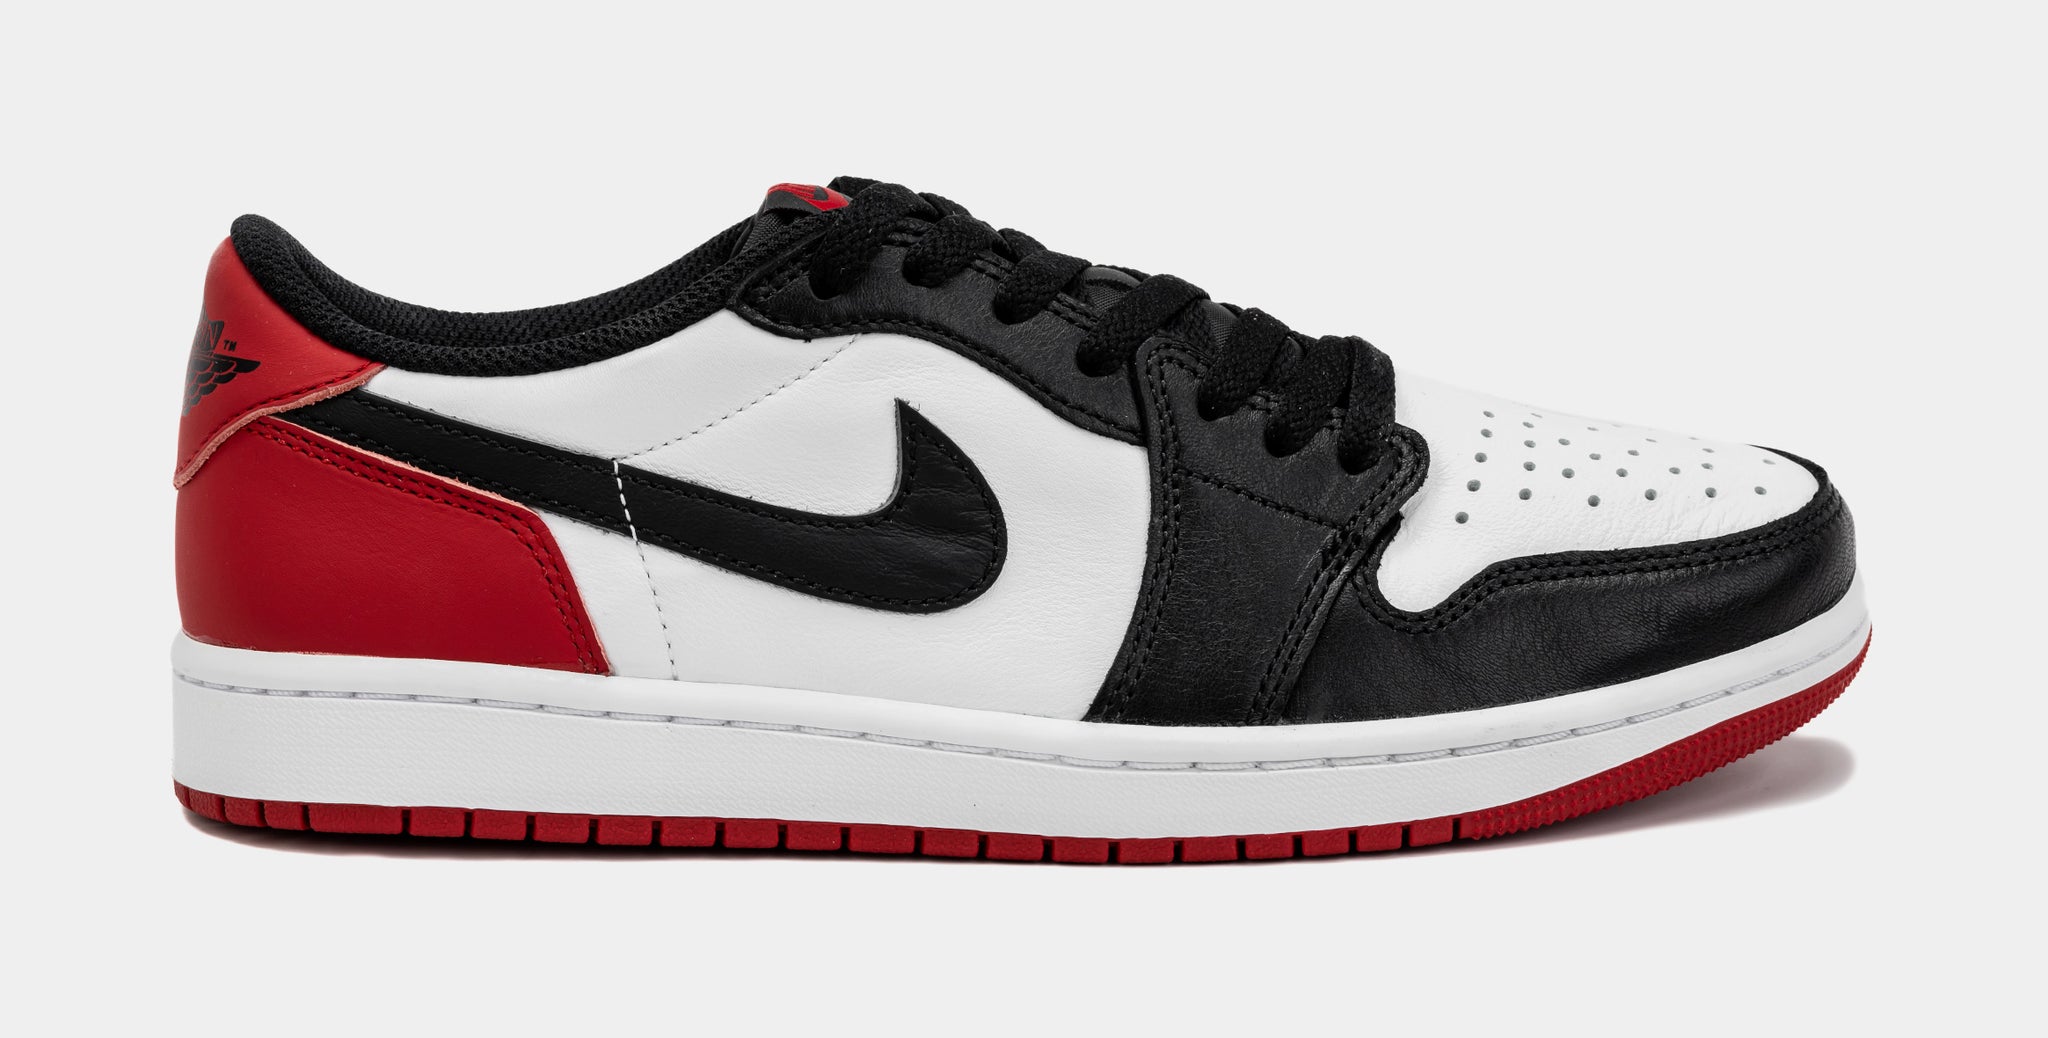 Air Jordan 1 Retro Low OG Black Toe Mens Lifestyle Shoes Black Red CZ0790-106 – Shoe Palace